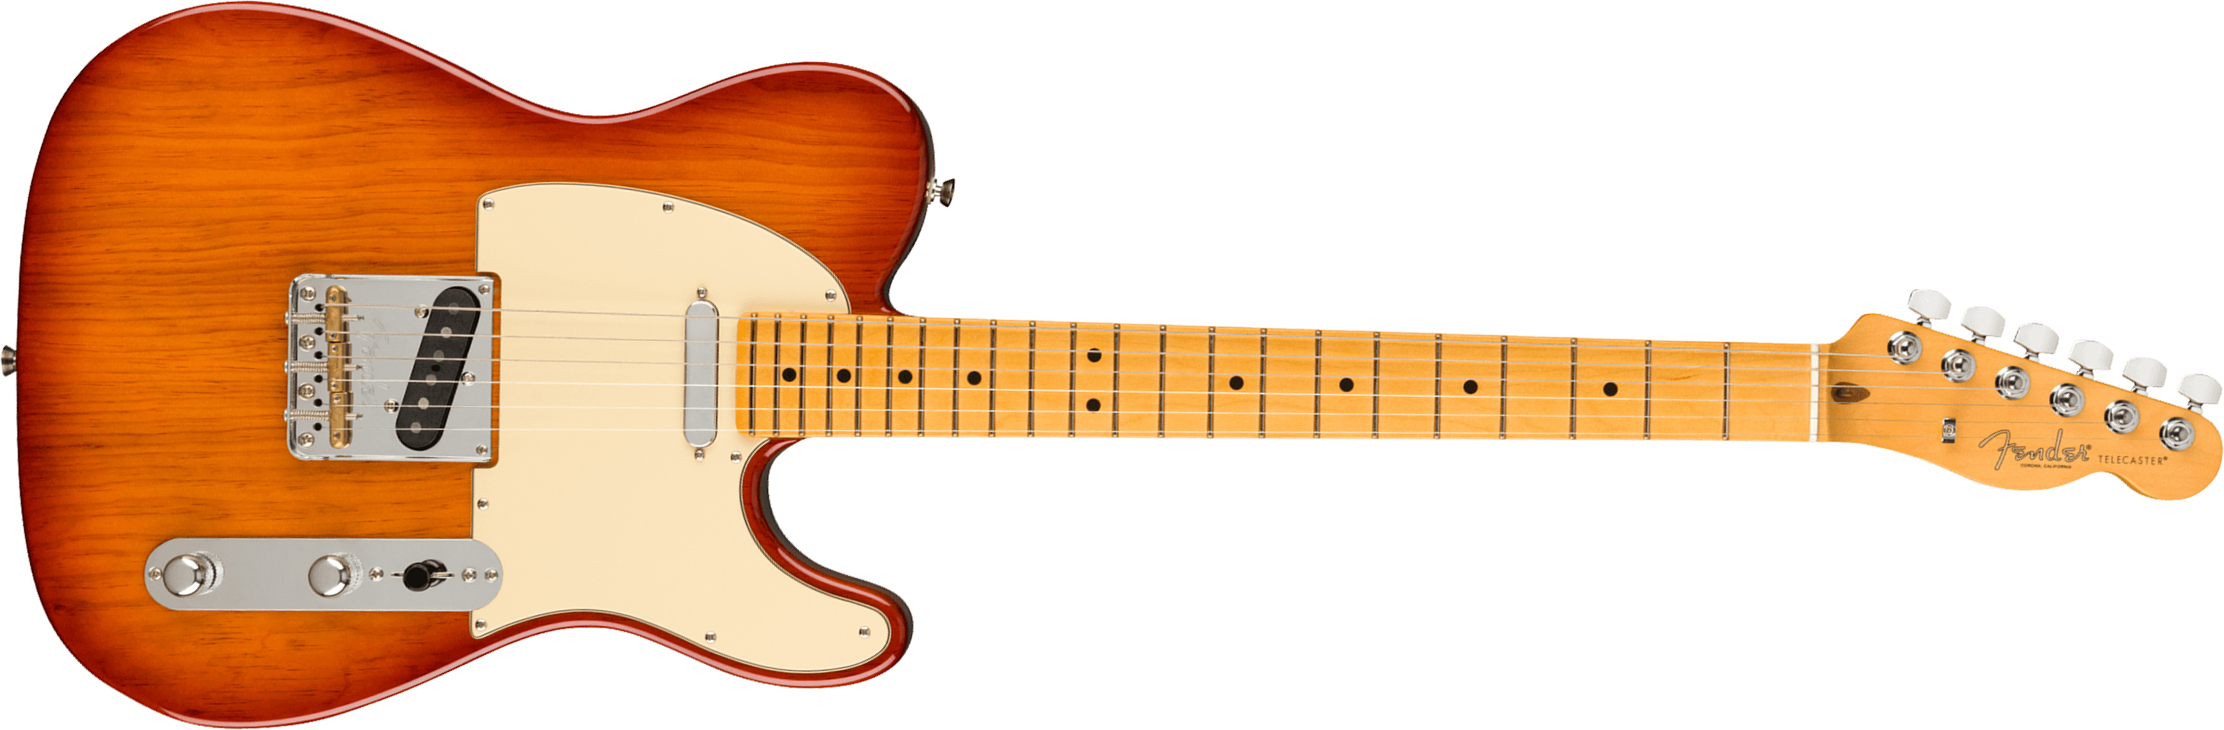 Fender Tele American Professional Ii Usa Mn - Sienna Sunburst - Guitarra eléctrica con forma de tel - Main picture